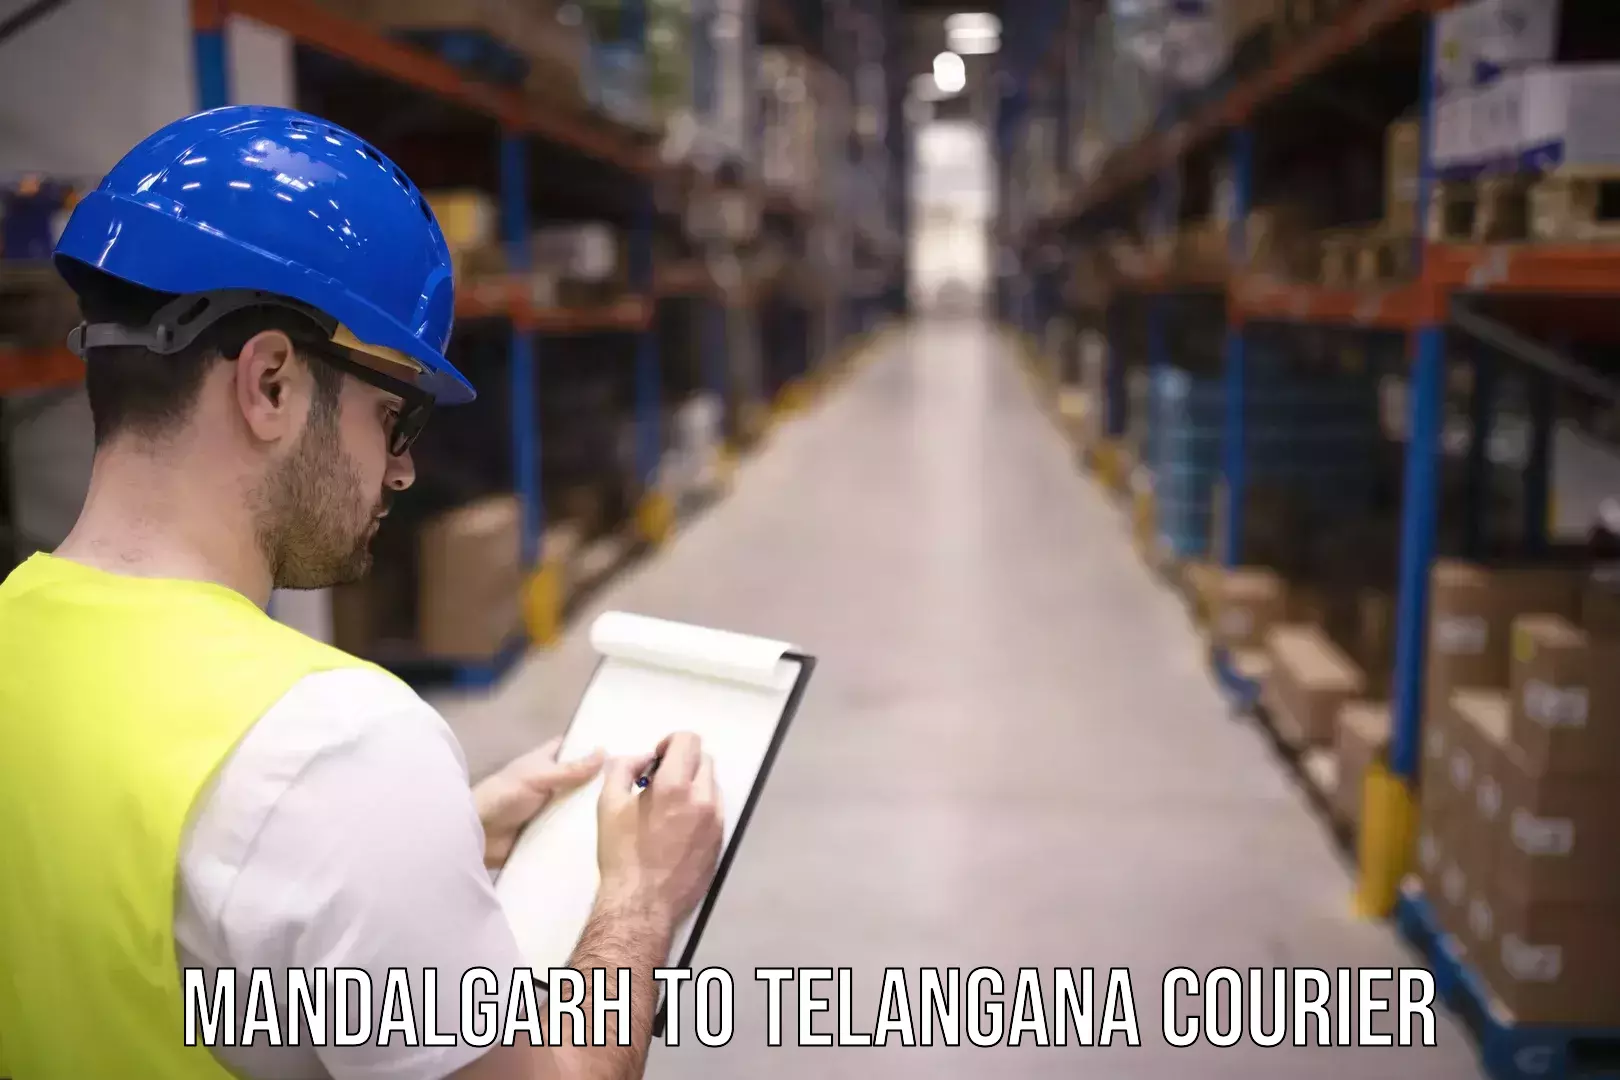 Courier tracking online Mandalgarh to Rangareddy